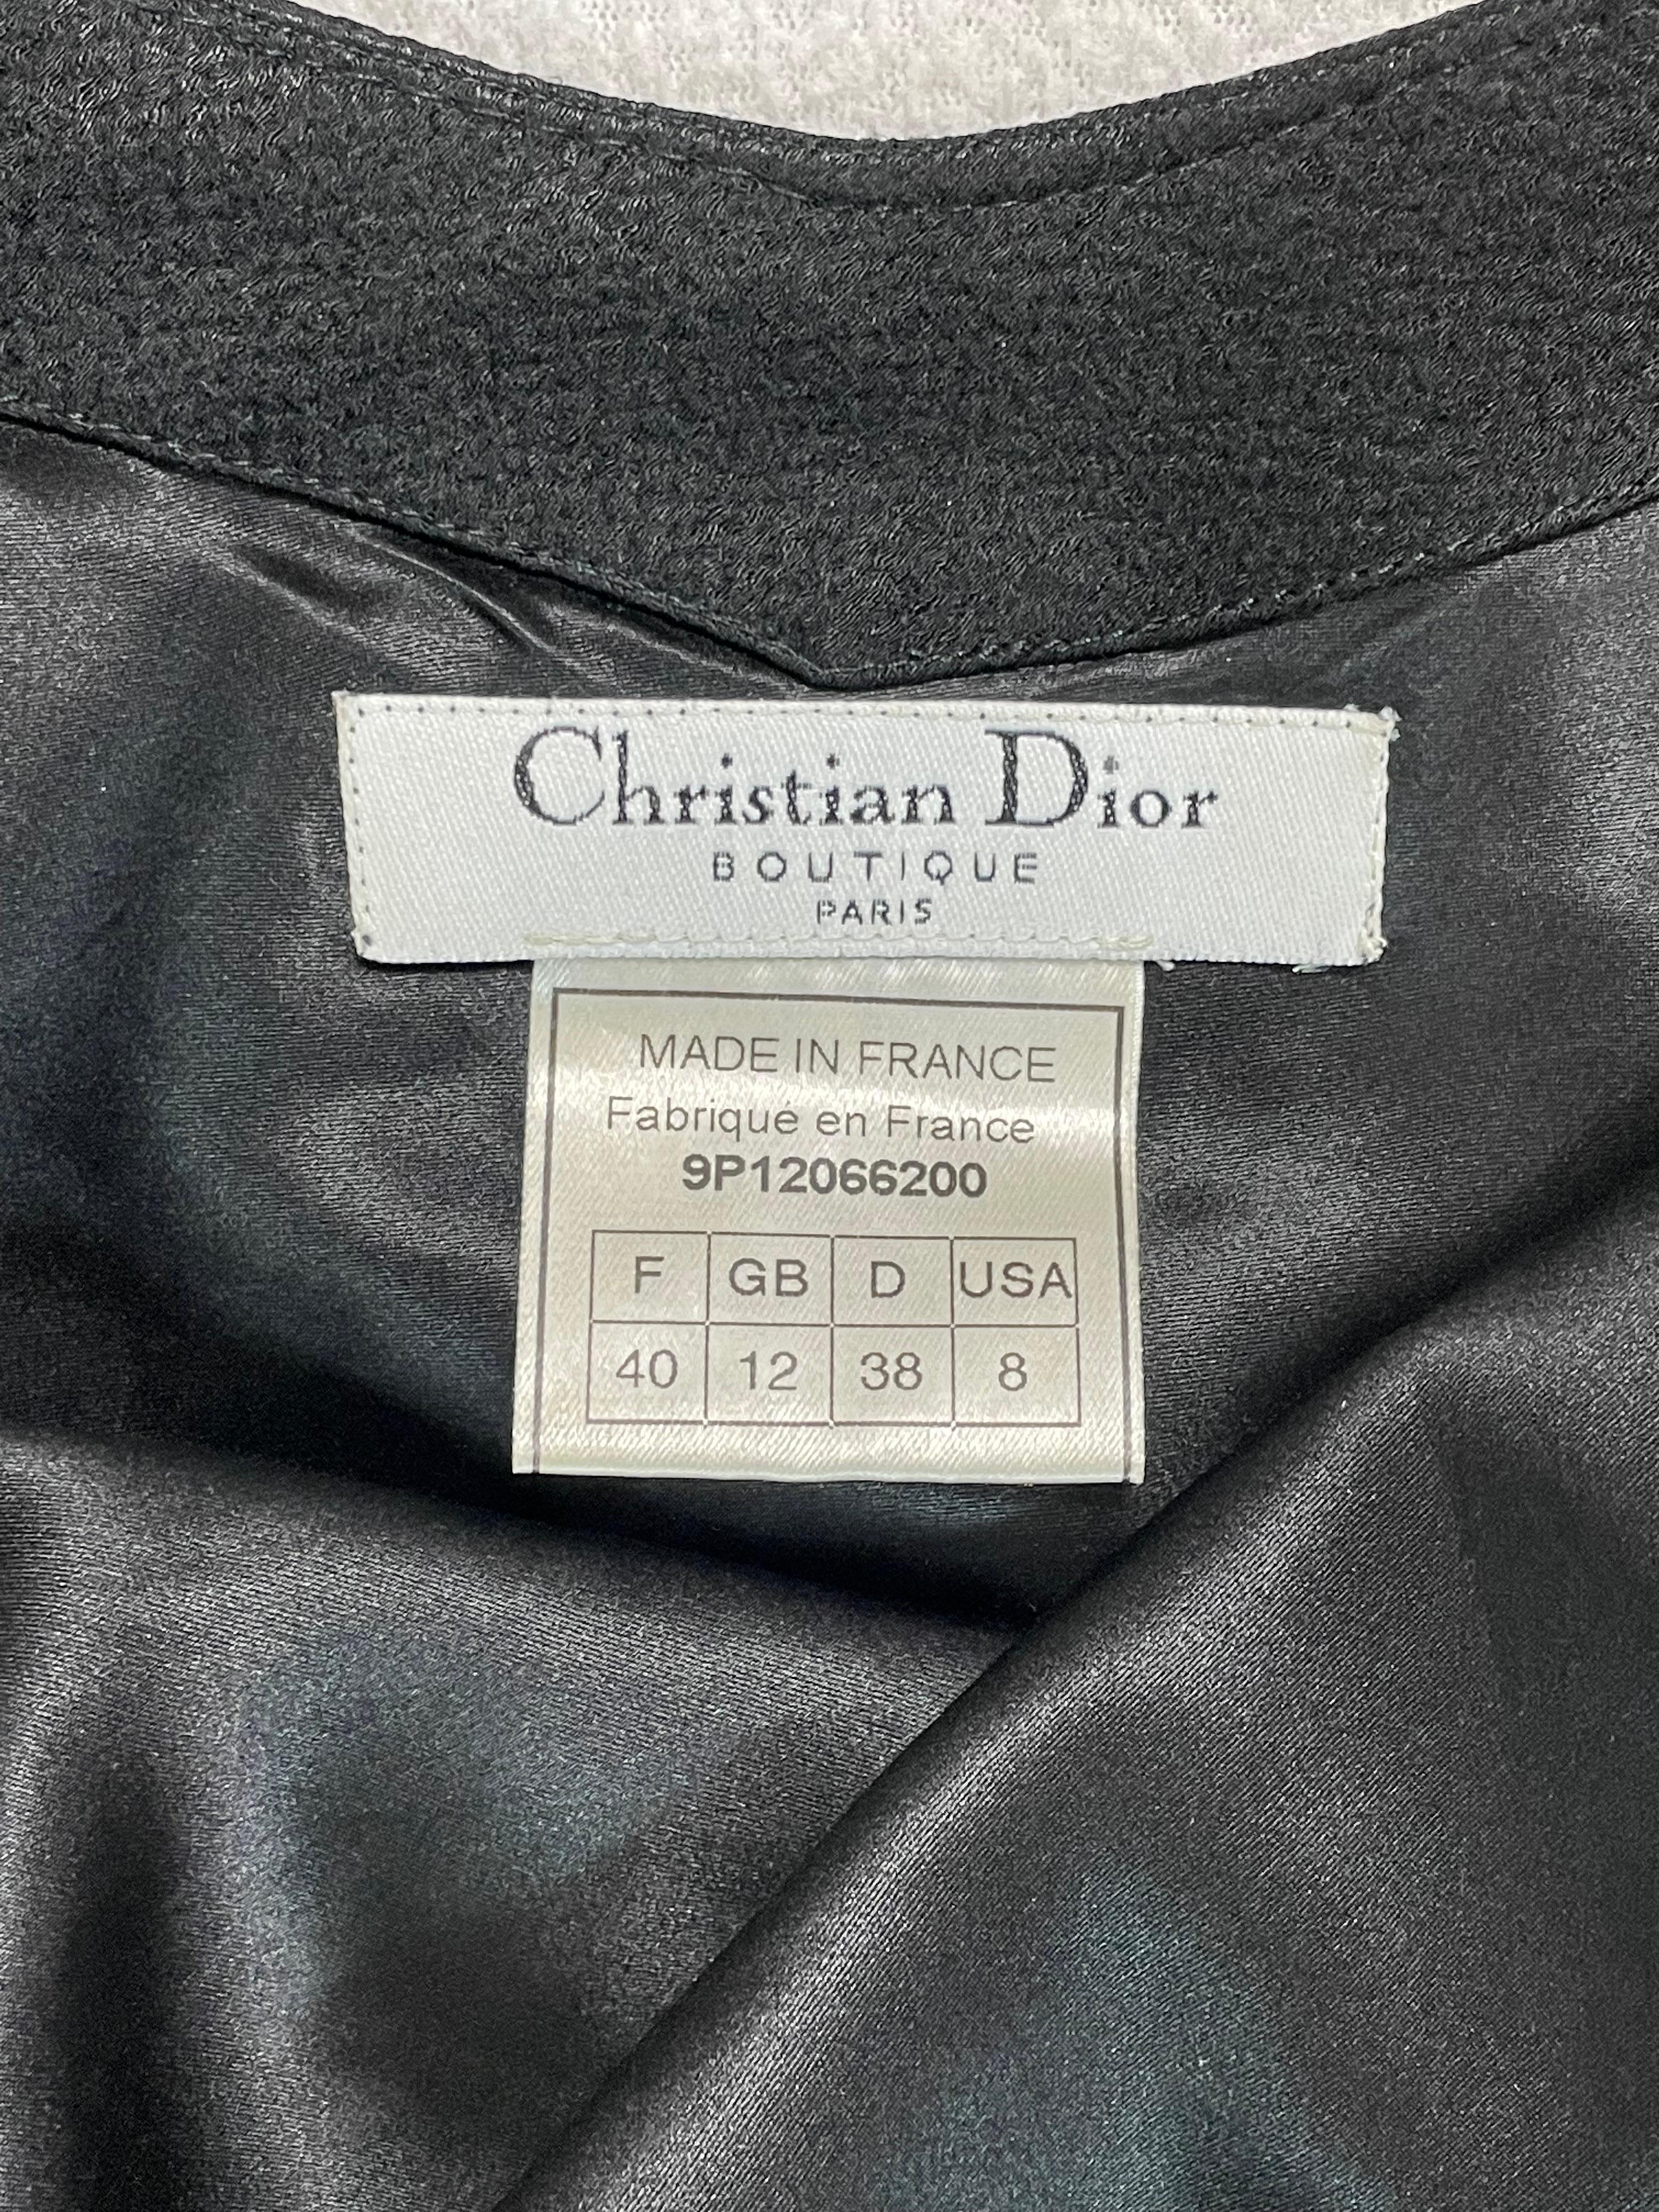 Women's S/S 1999 Christian Dior John Galliano Black Long High Slit Maxi Lace Dress